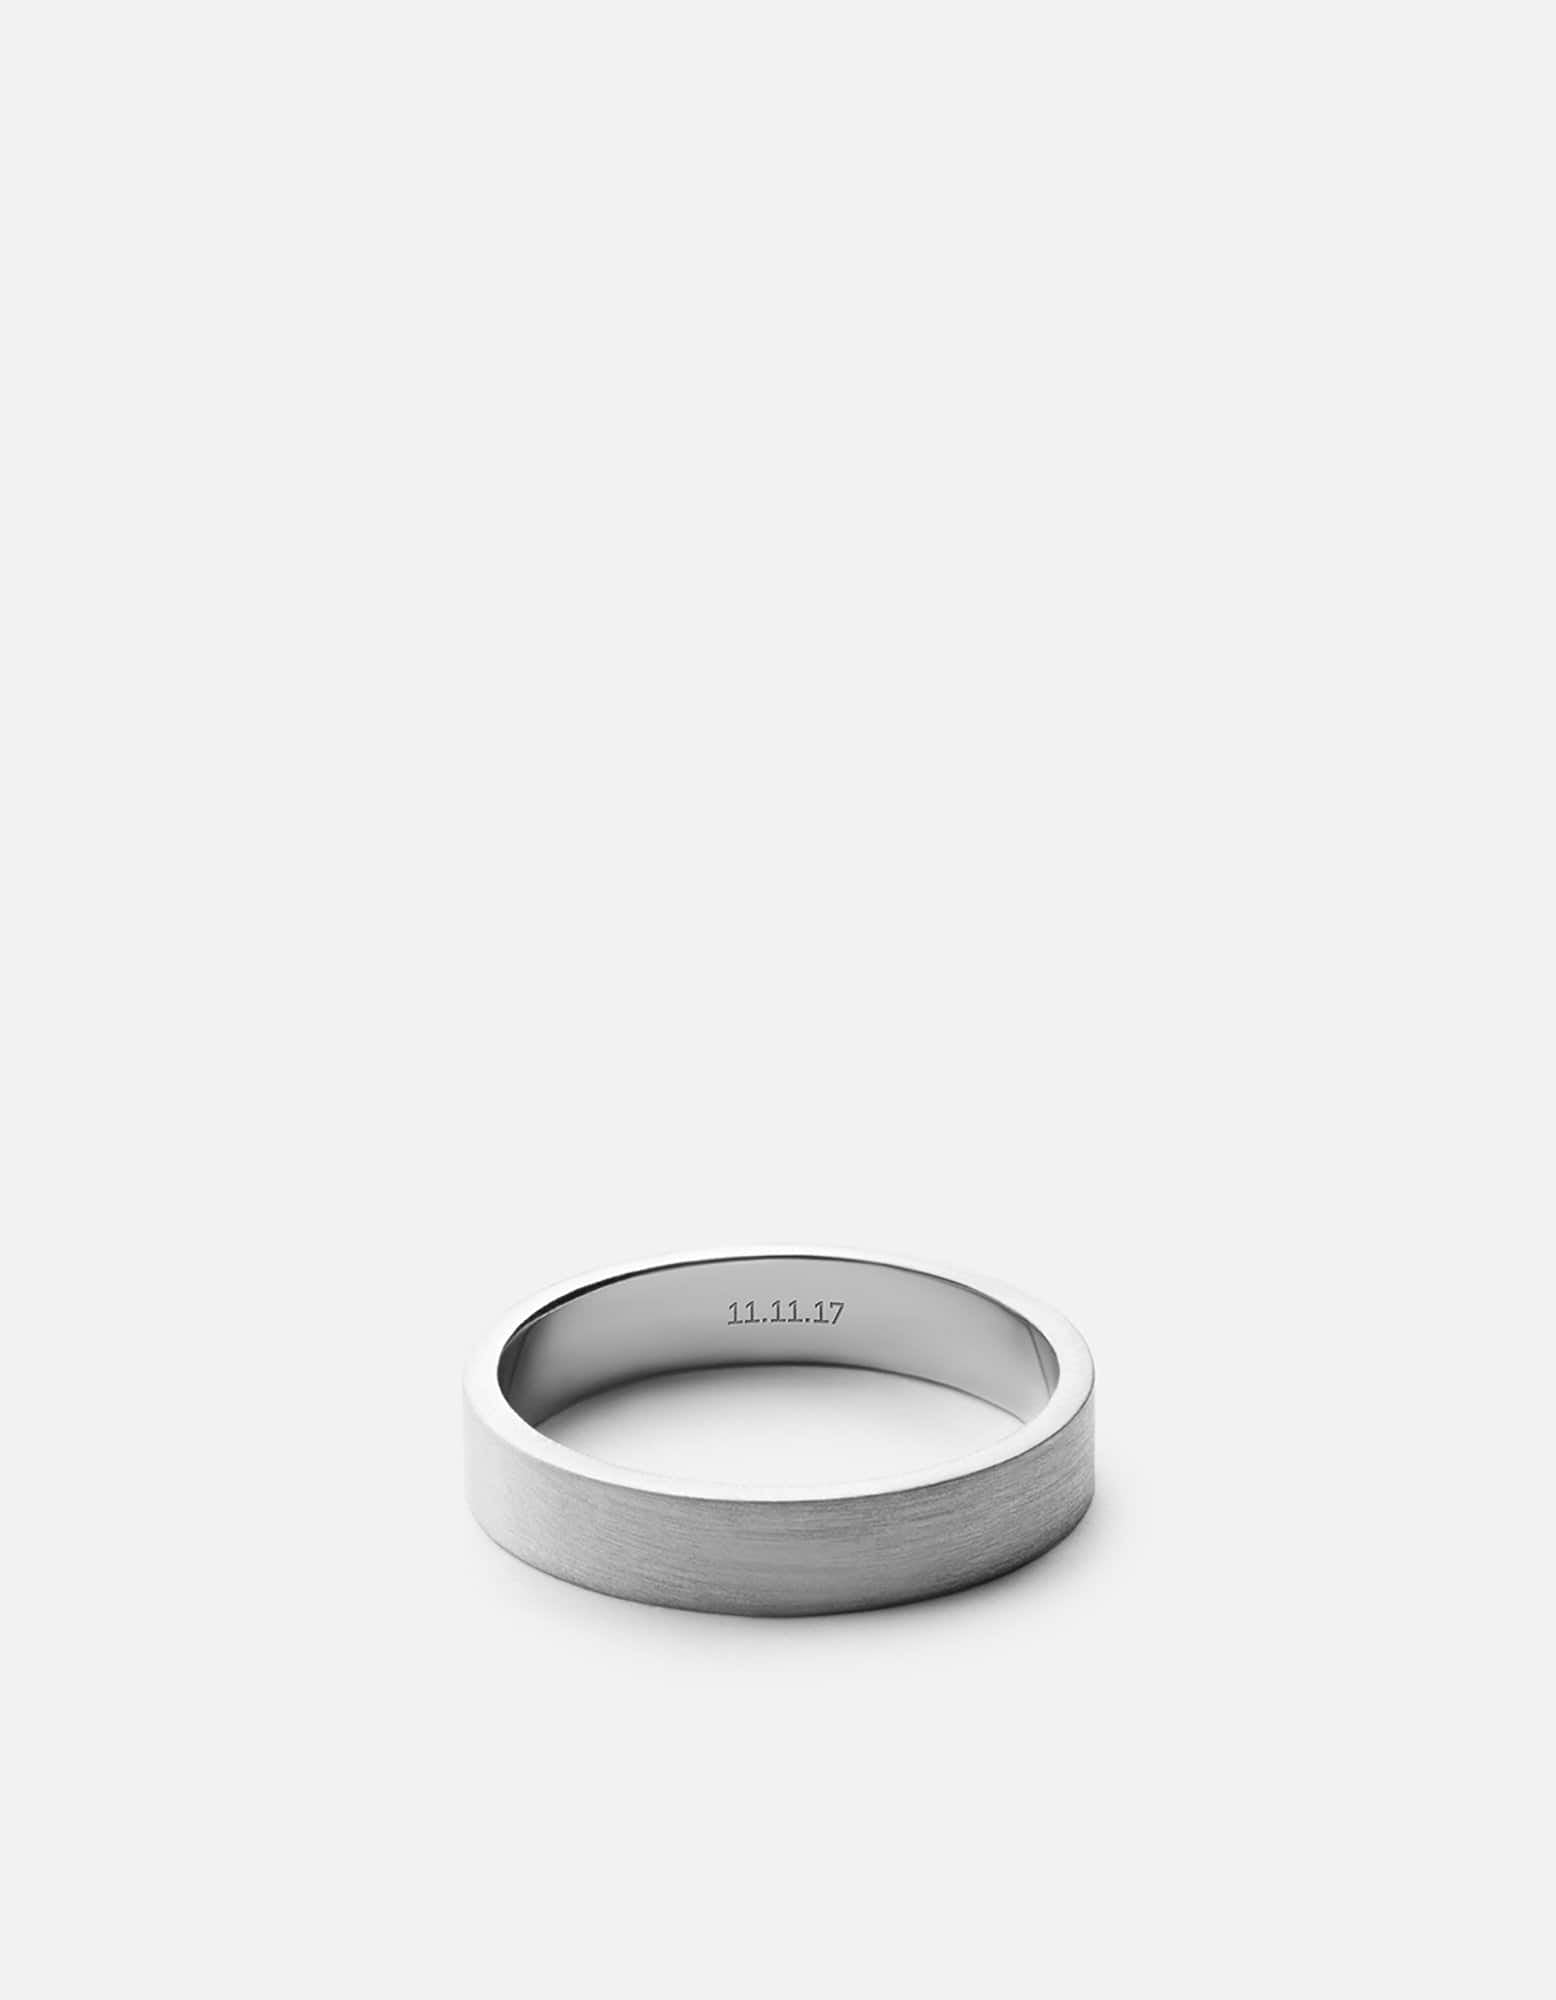 Rings for Men Stainless Steel Ring Silver GOLD Toned Design Band Finger Ring  for Men and Boys.